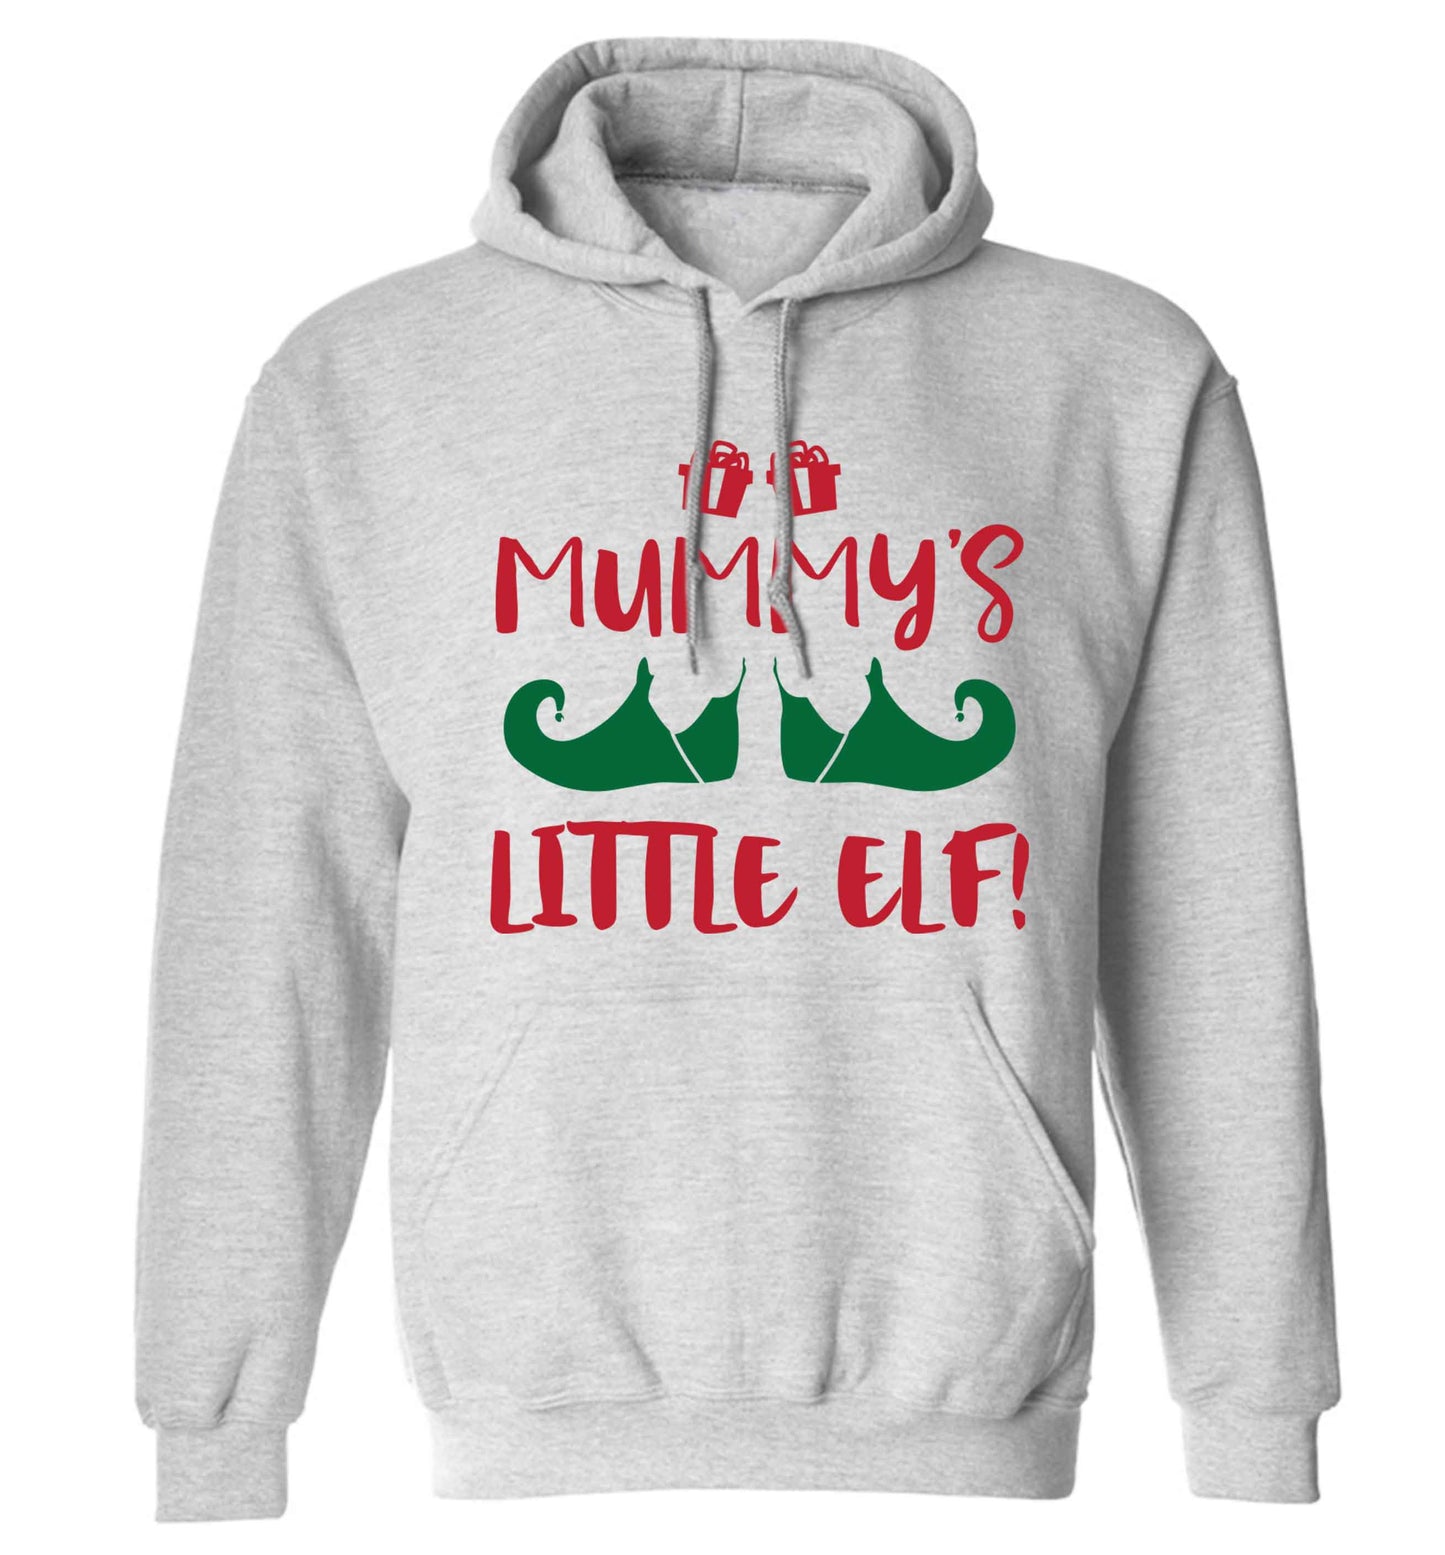 Mummy's little elf adults unisex grey hoodie 2XL